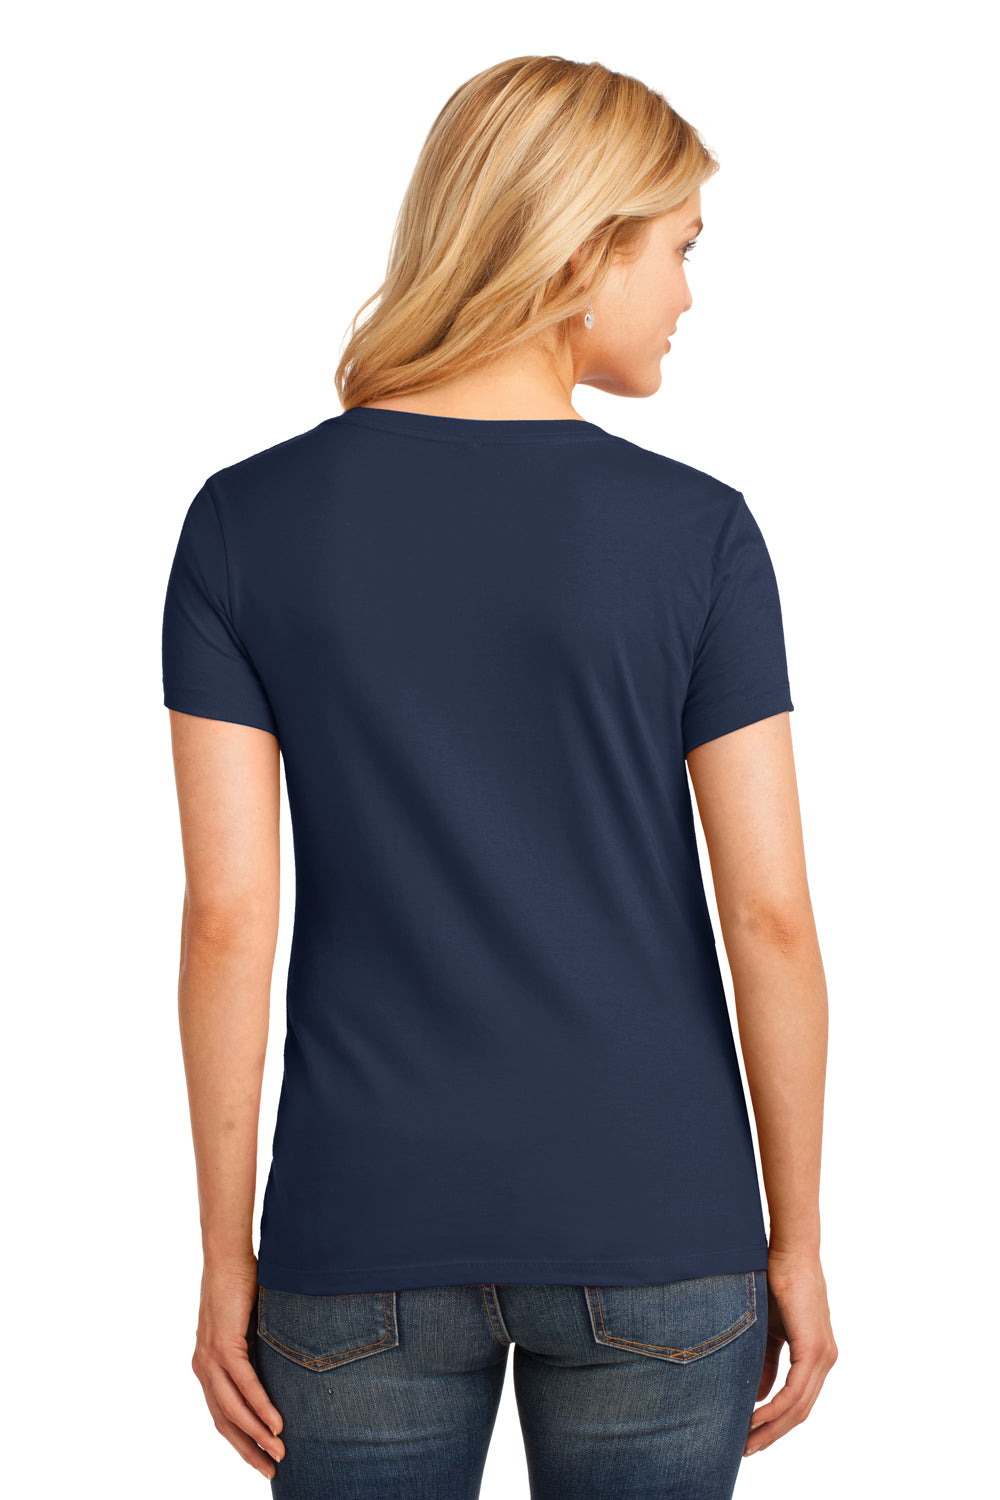 Port & Company LPC54V Womens Core Short Sleeve V-Neck T-Shirt Navy Blue Back